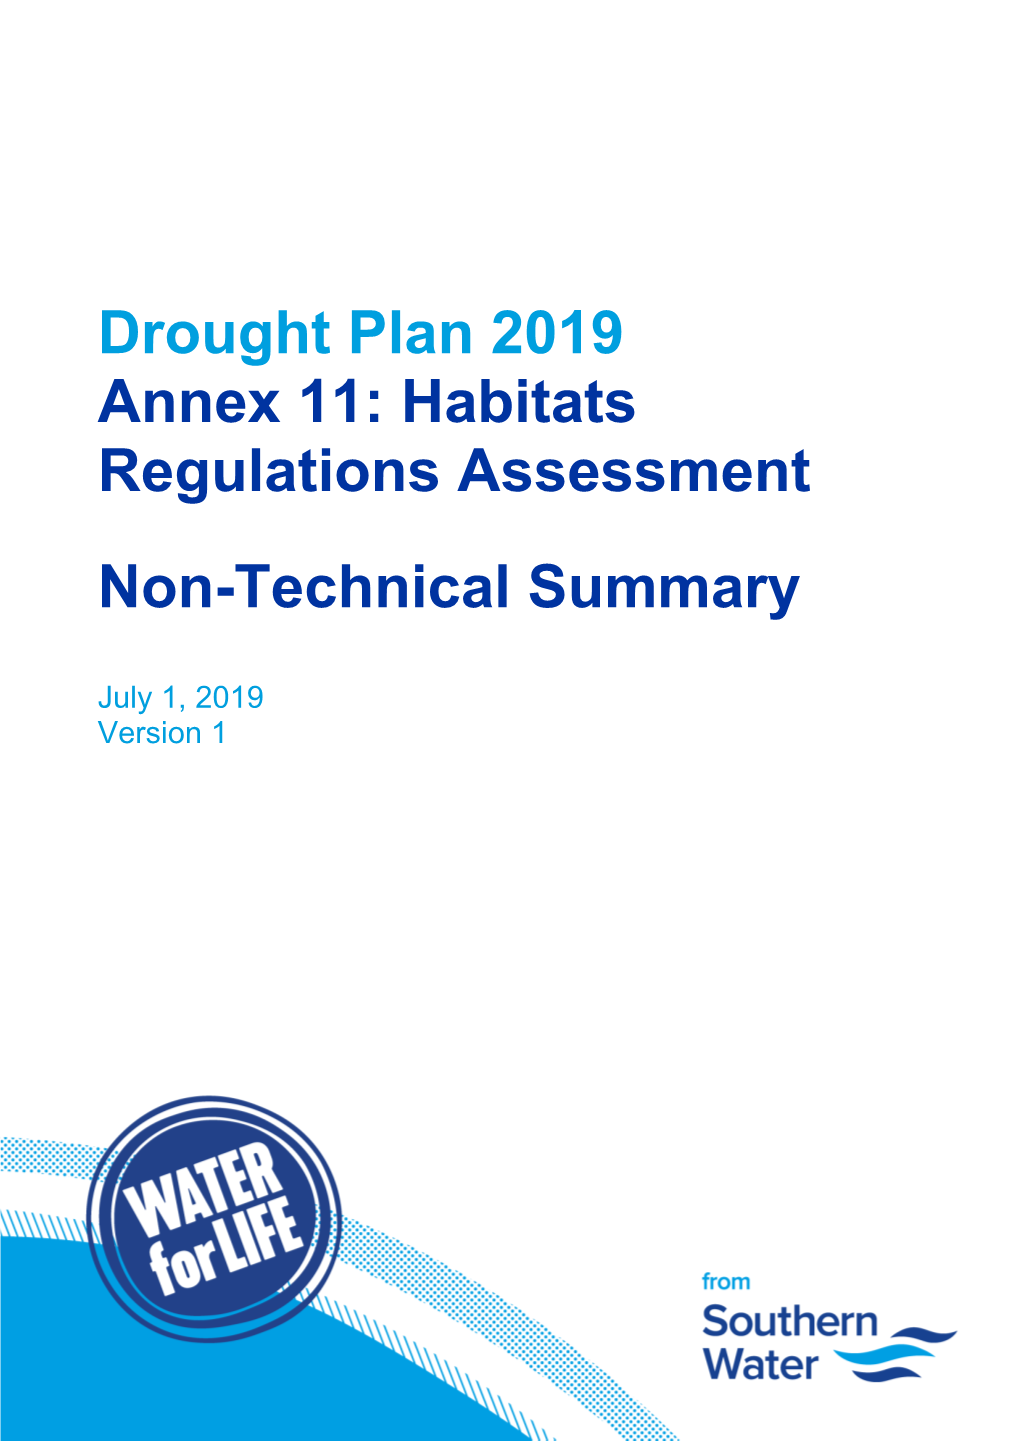 Annex 11: Habitats Regulations Assessment Non-Technical Summary